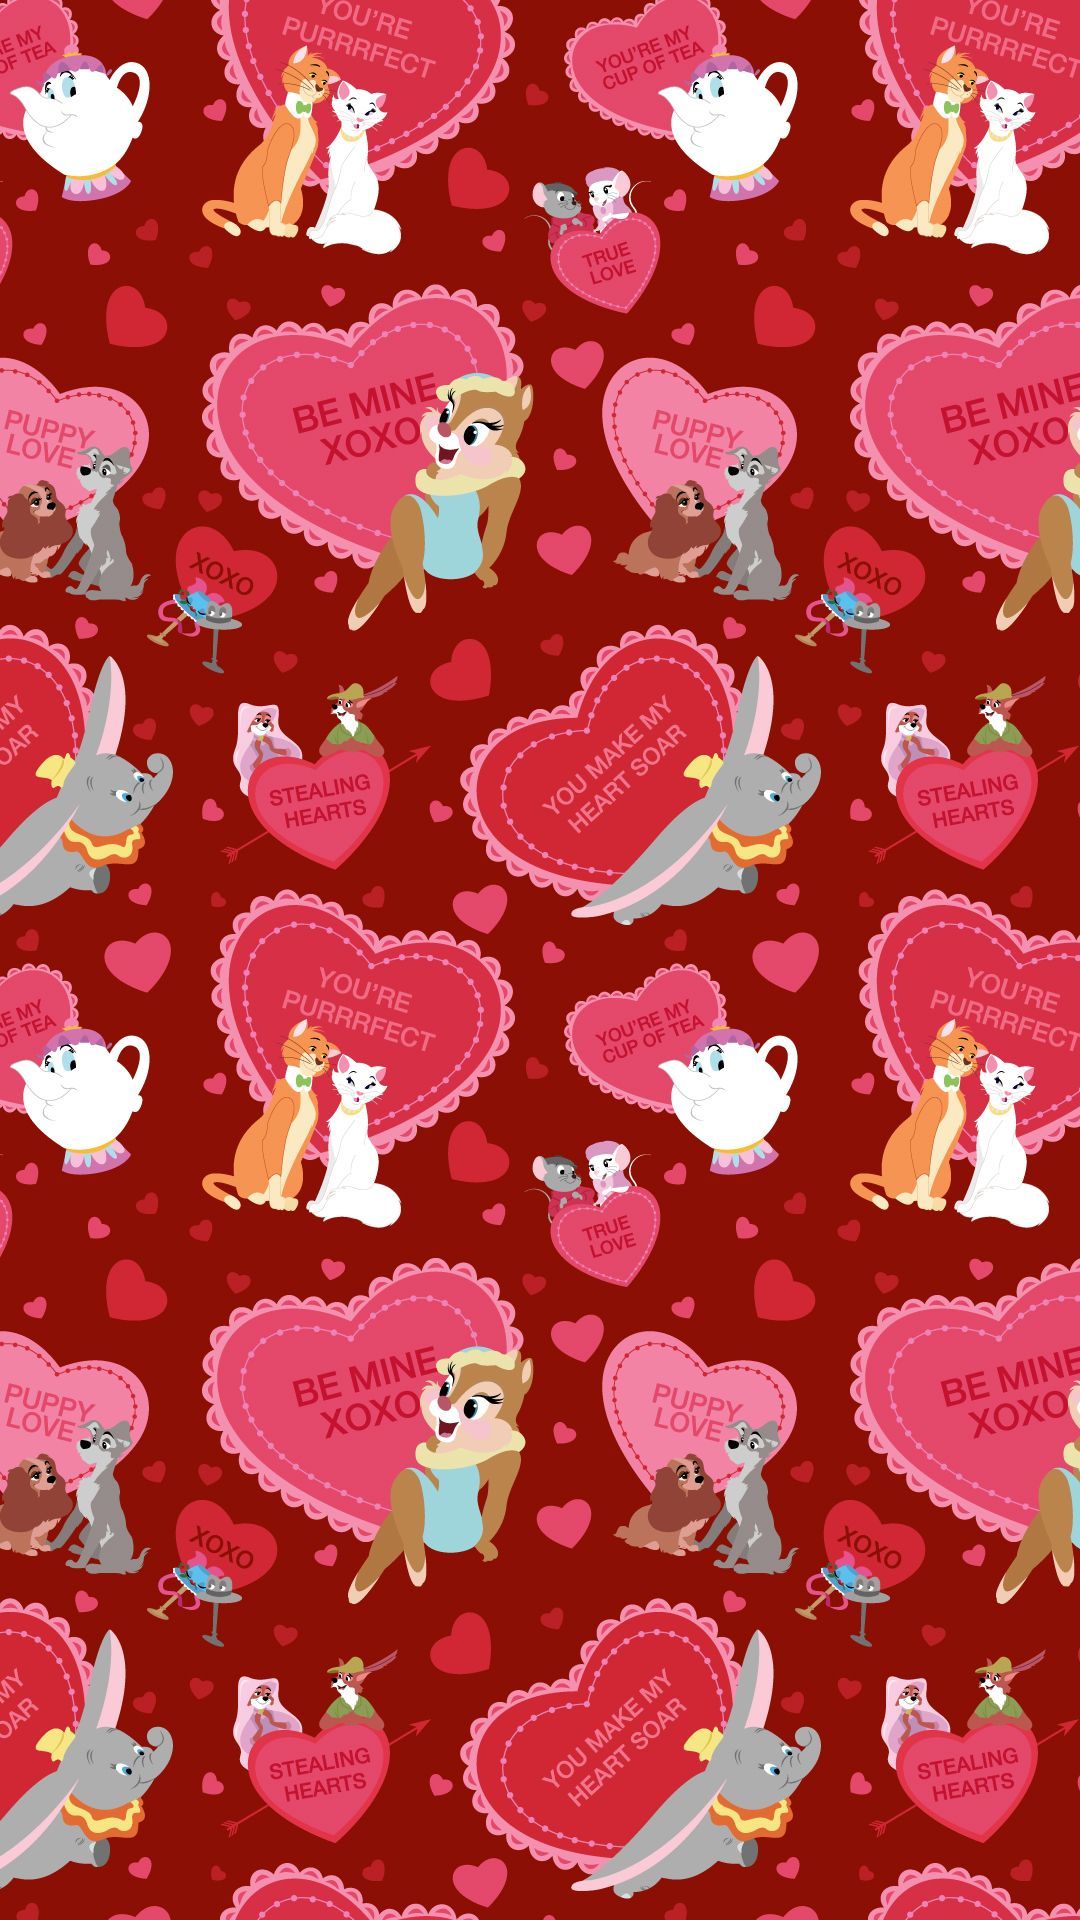 Disney Couples Wallpaper / Be my Valentine/ Fondo de pantalla de parejas Disney. Disney background, Disney wallpaper, Wallpaper iphone disney